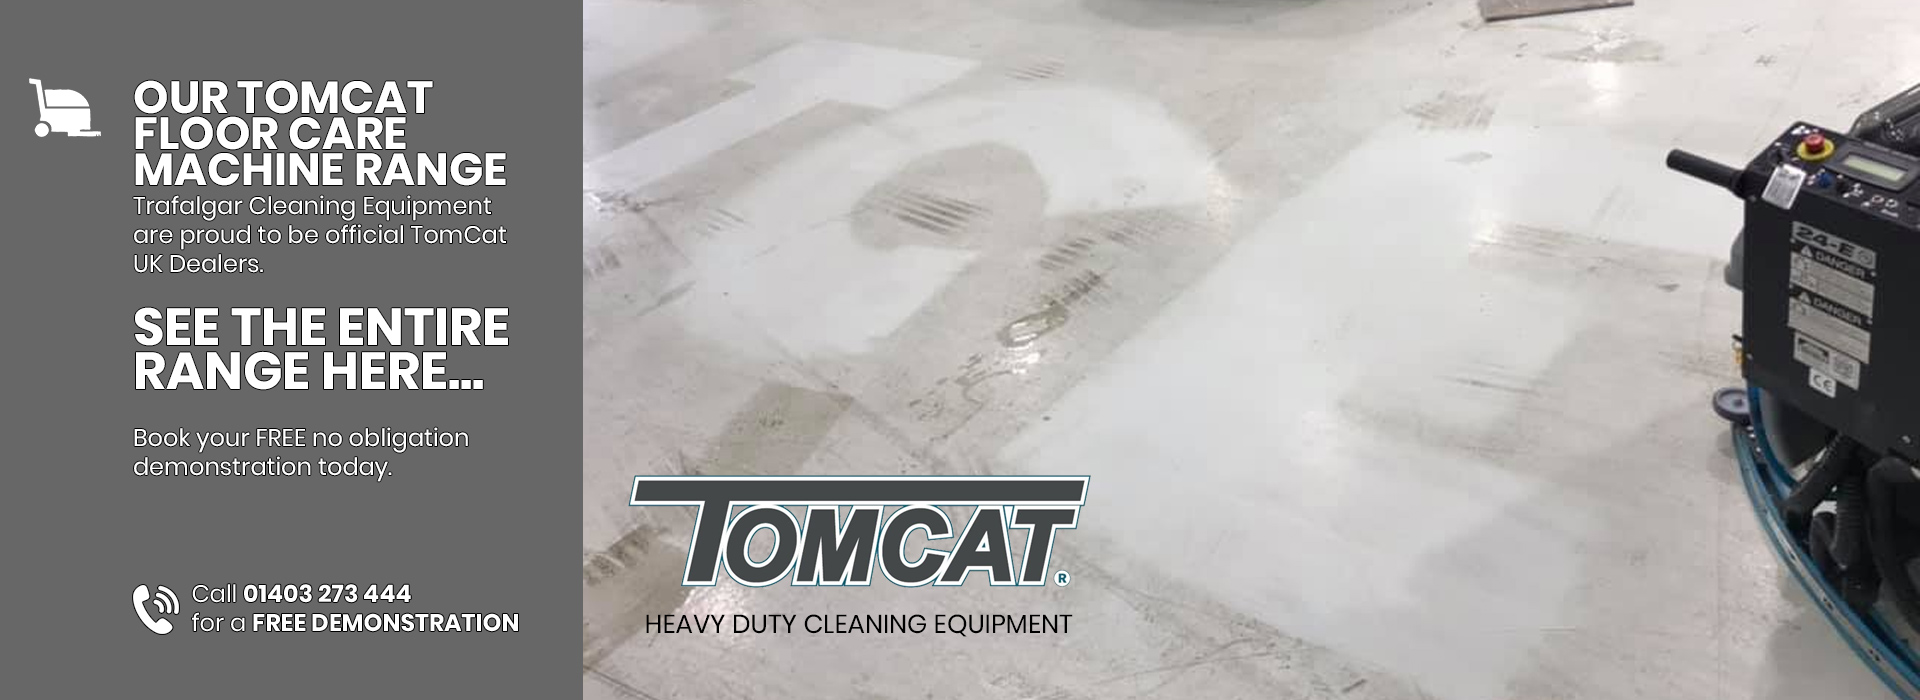 TOMCAT Floor Care Range